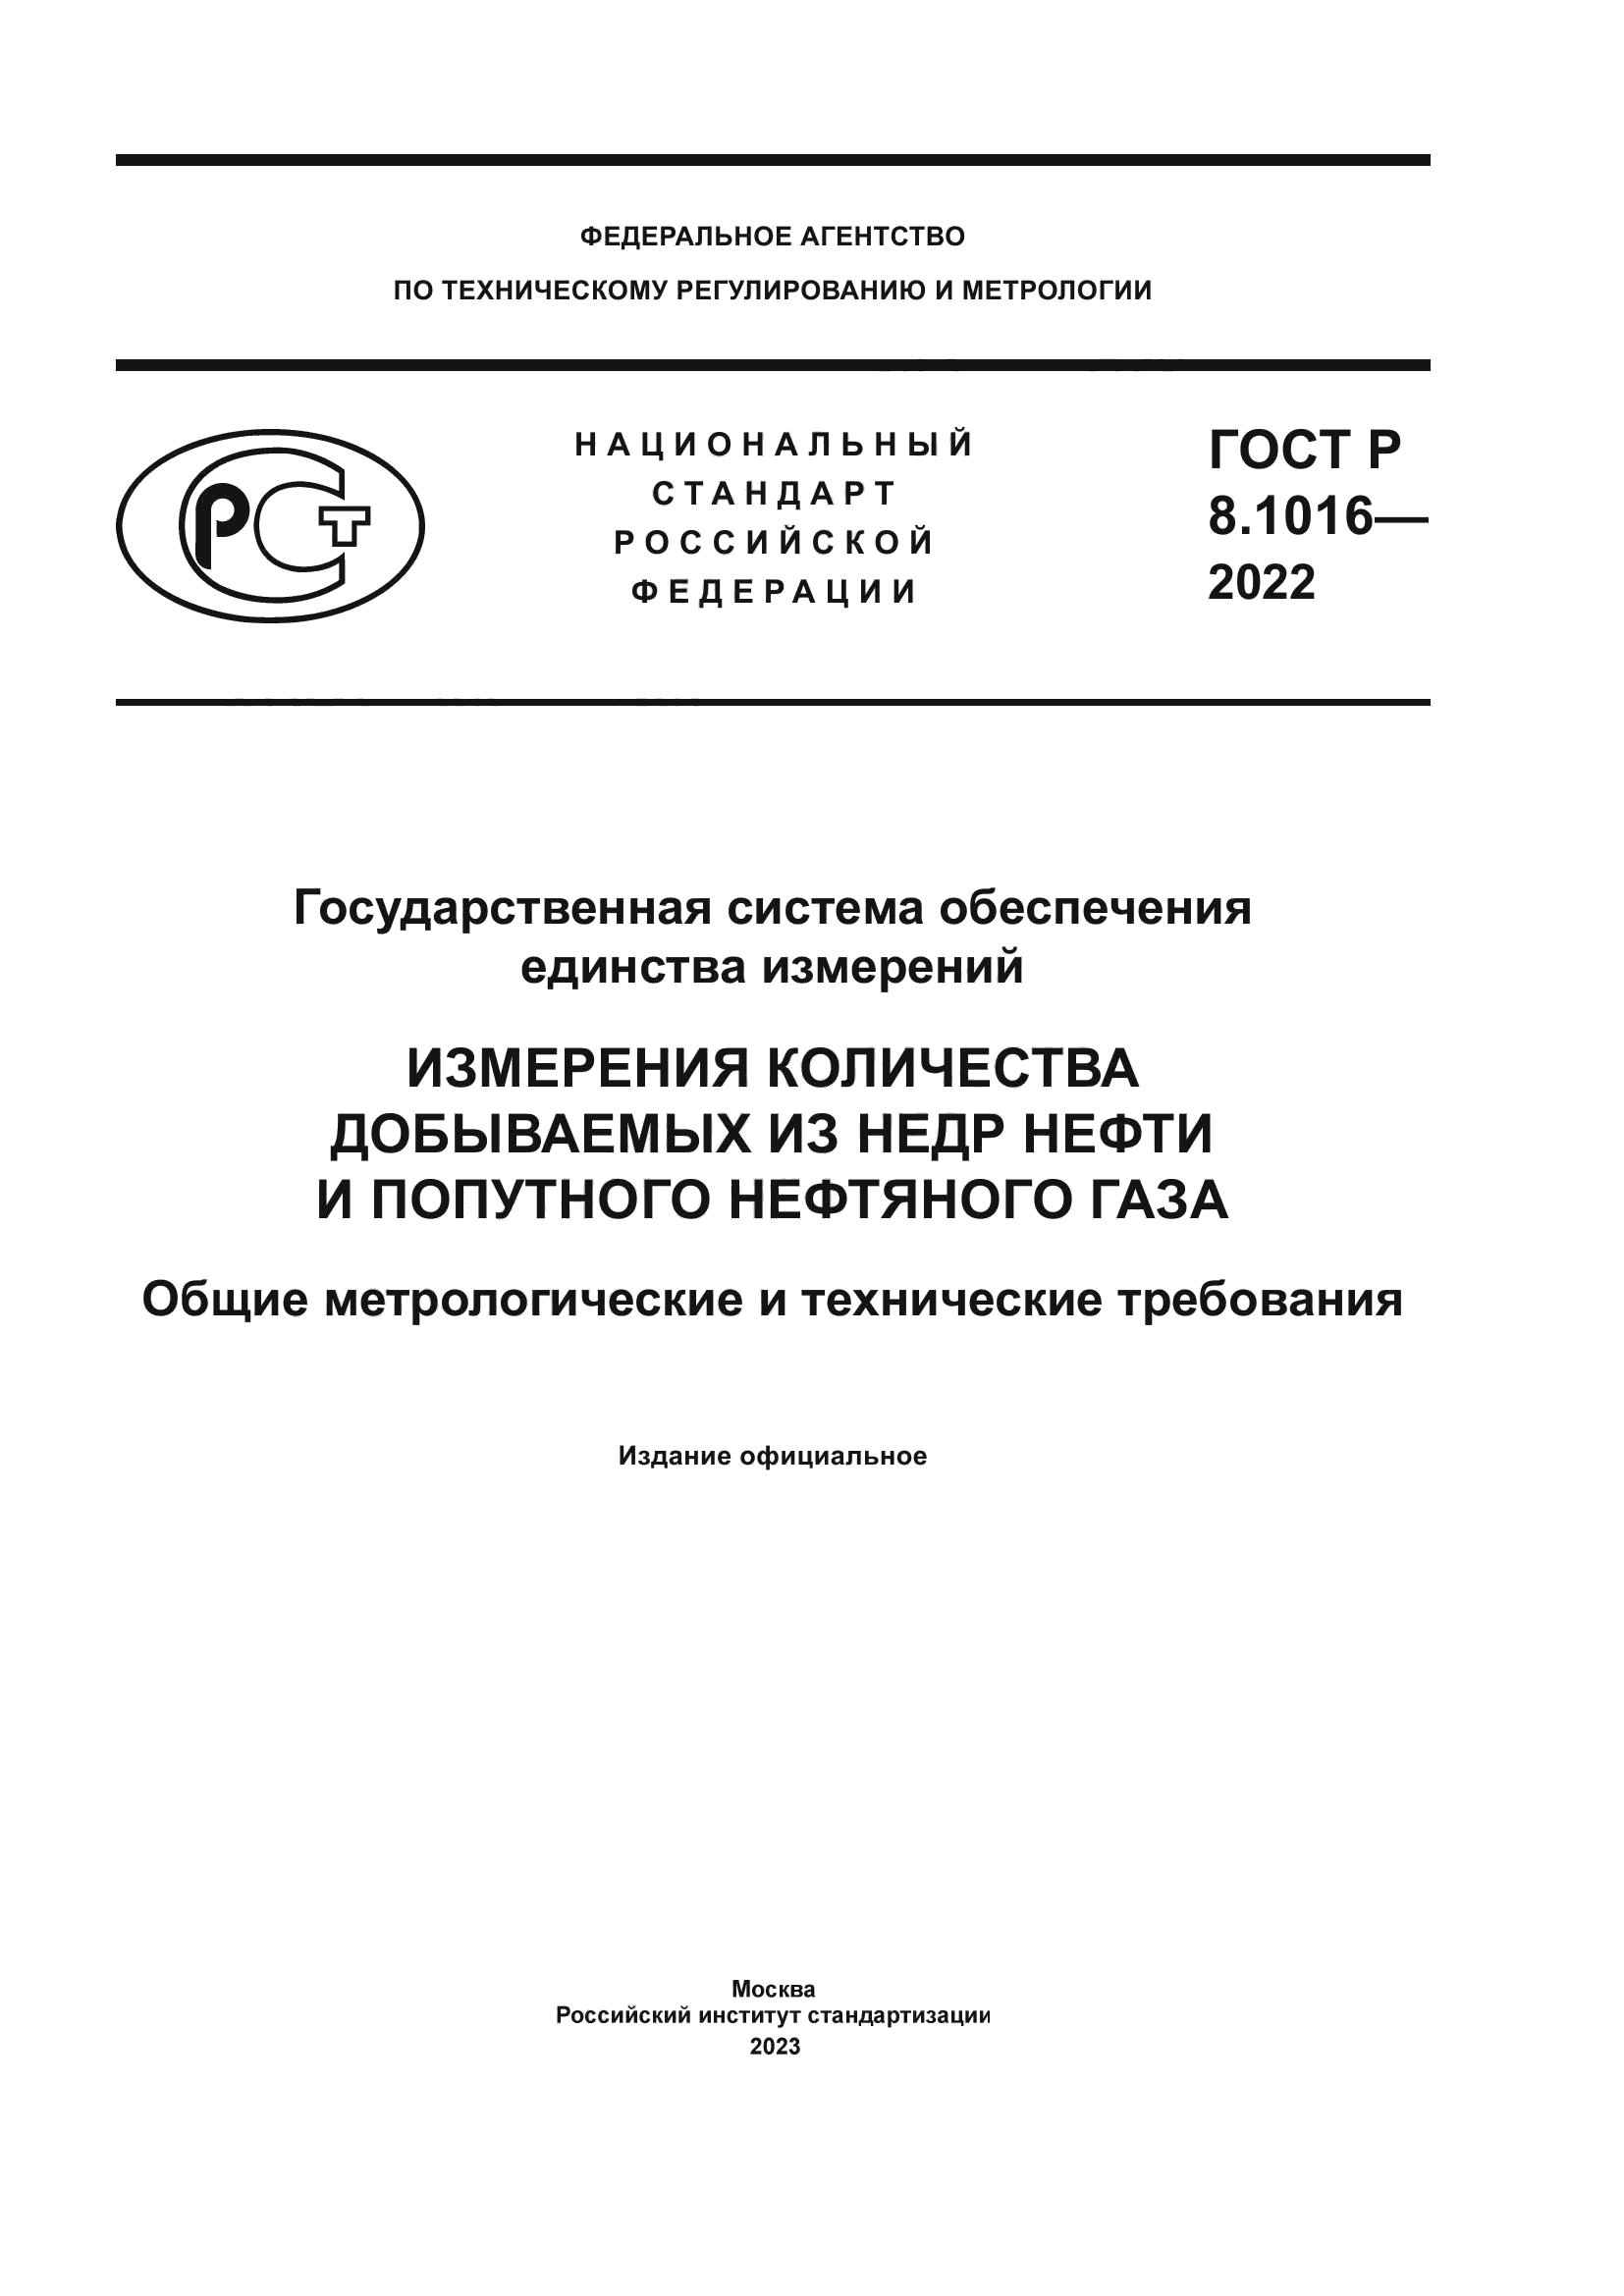 ГОСТ Р 8.1016-2022